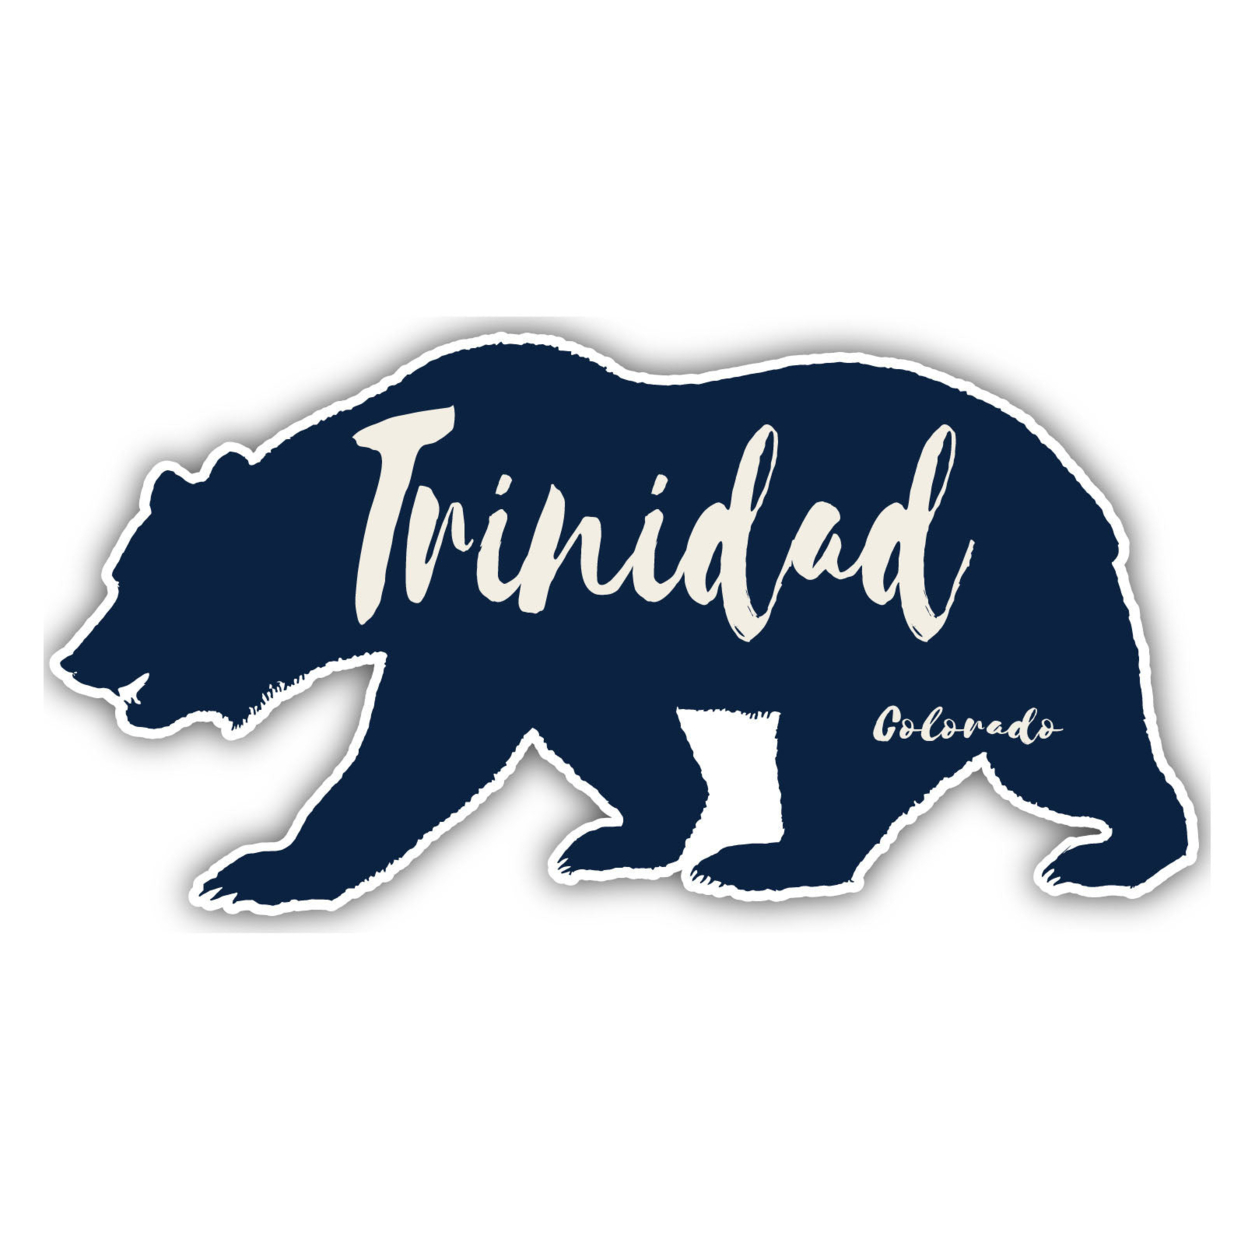 Trinidad Colorado Souvenir Decorative Stickers (Choose Theme And Size) - Single Unit, 2-Inch, Bear